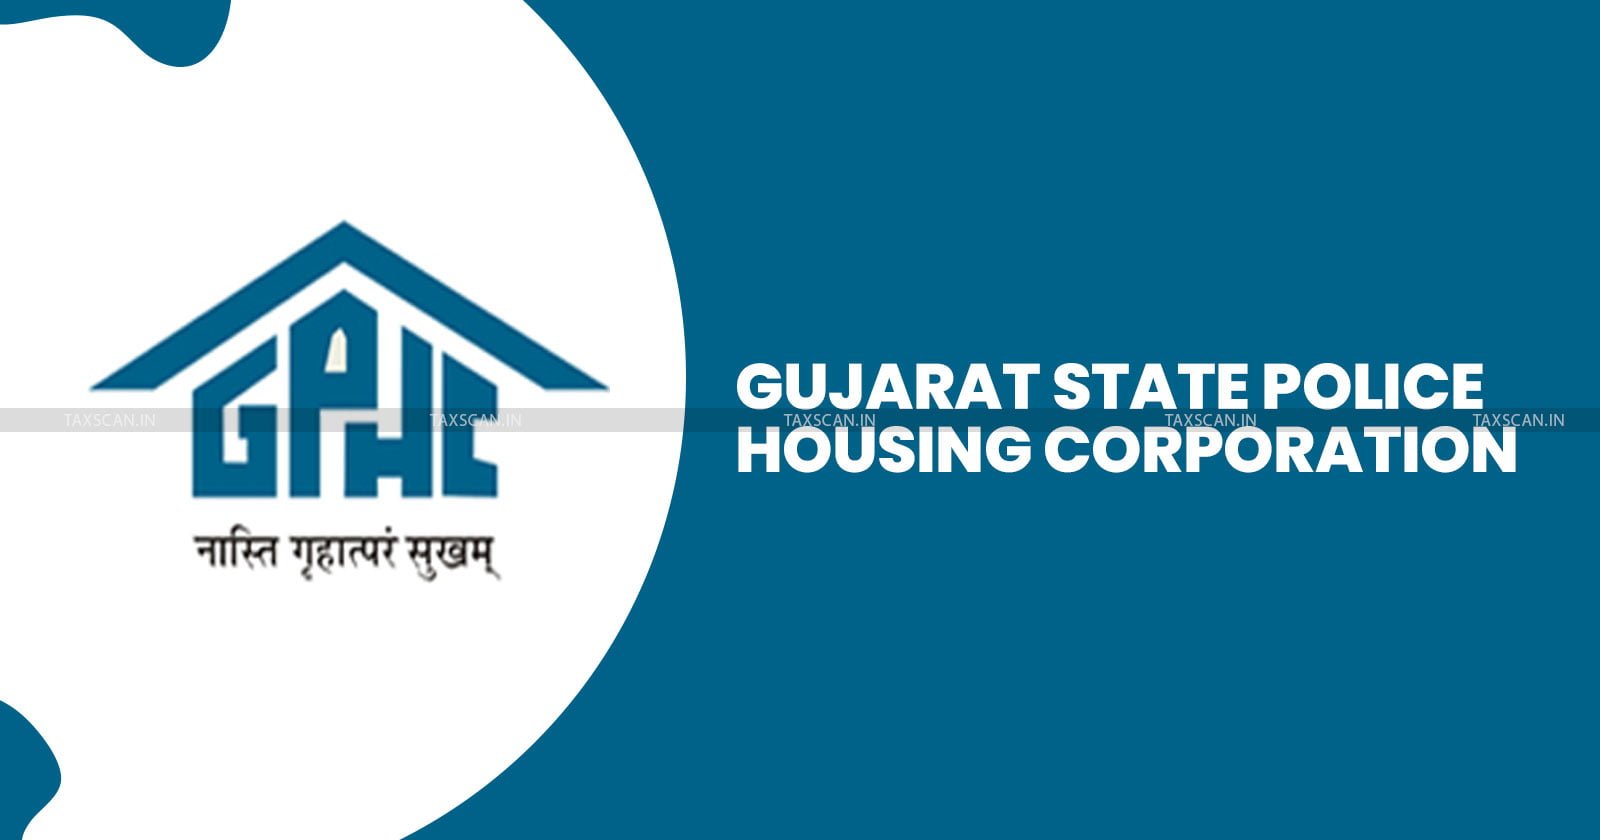 Service Tax Liability - No Service Tax Liability - Service Tax Liability on Construction of Houses - Construction of Houses - JNNURM - Construction - Gujarat State Police Housing Corporation Ltd - CESTAT - Taxscan